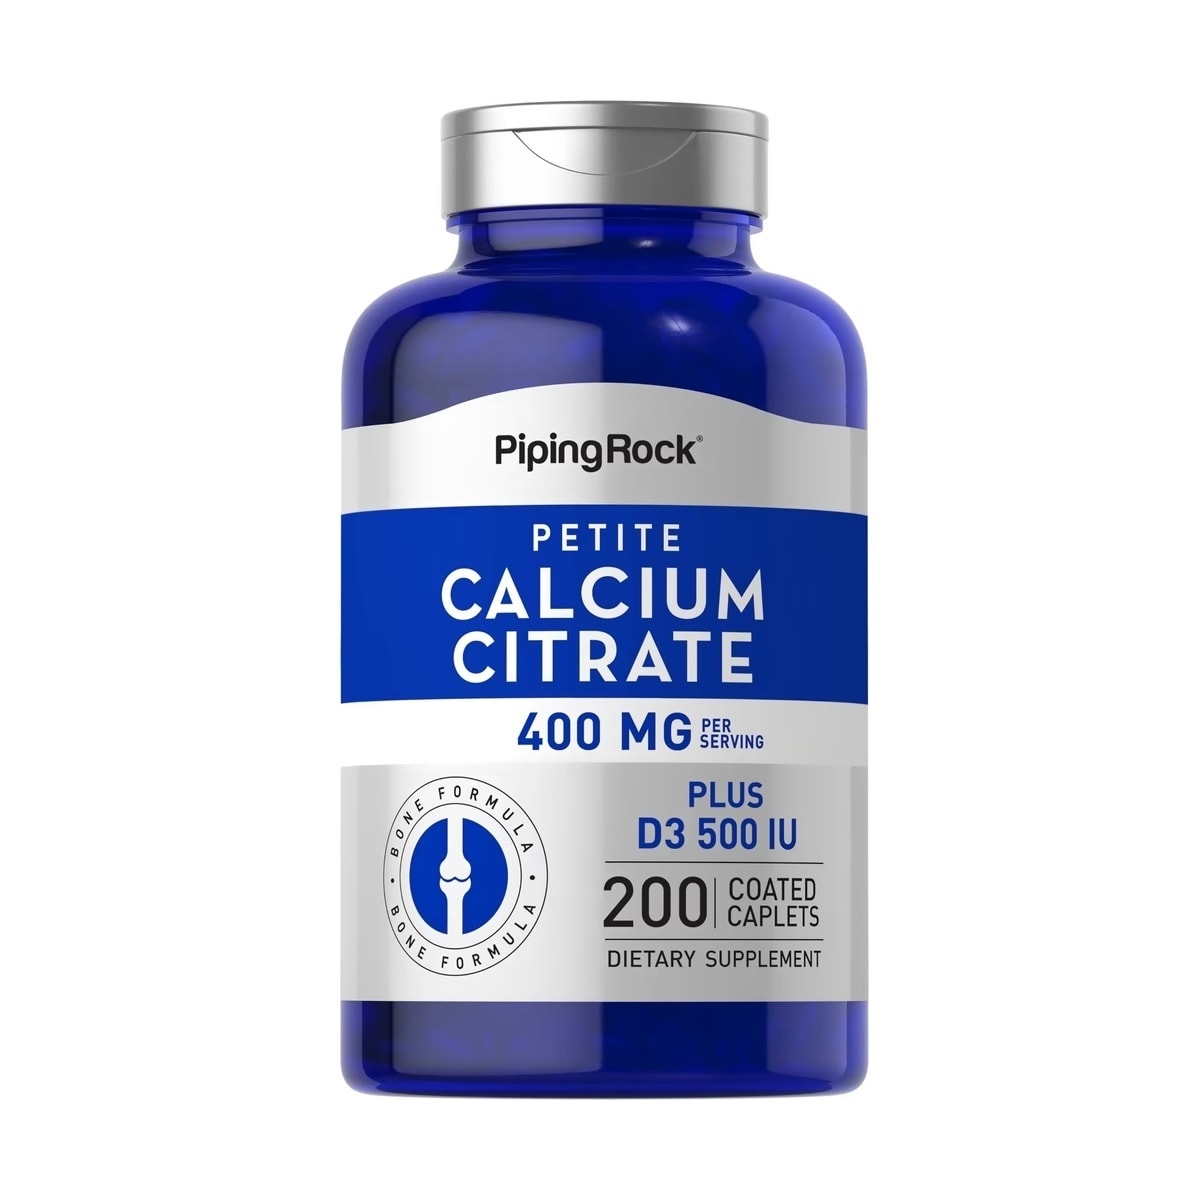 Calcium Citrate Plus Vitamin D3, 400 mg (per serving), 200 Coated Caplets